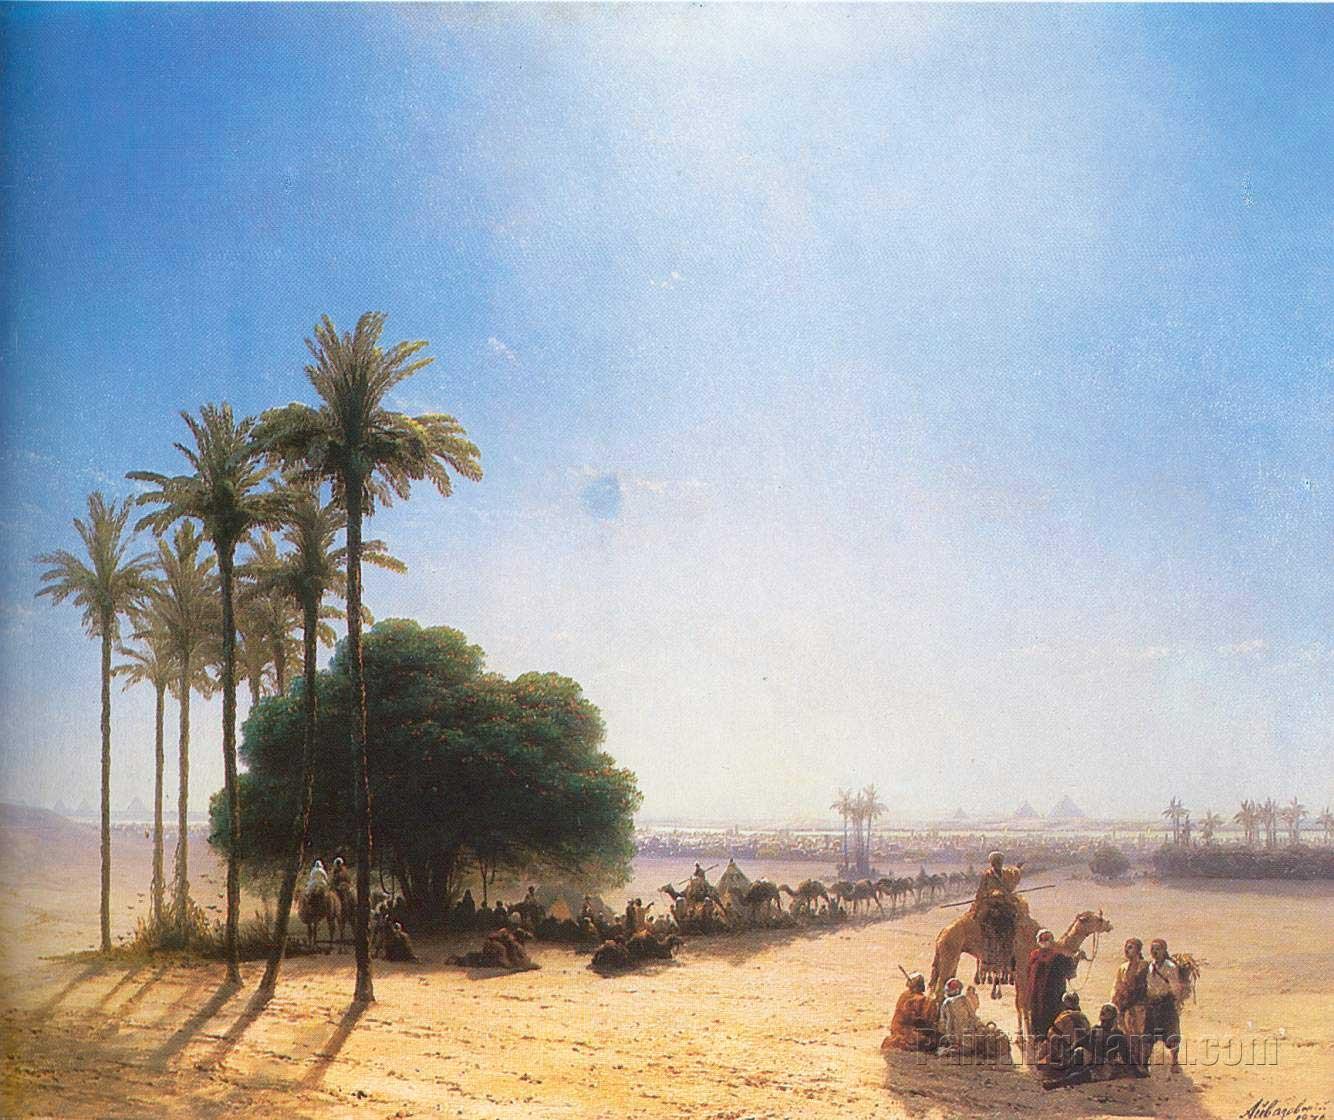 Caravan in the Oasis. Egypt